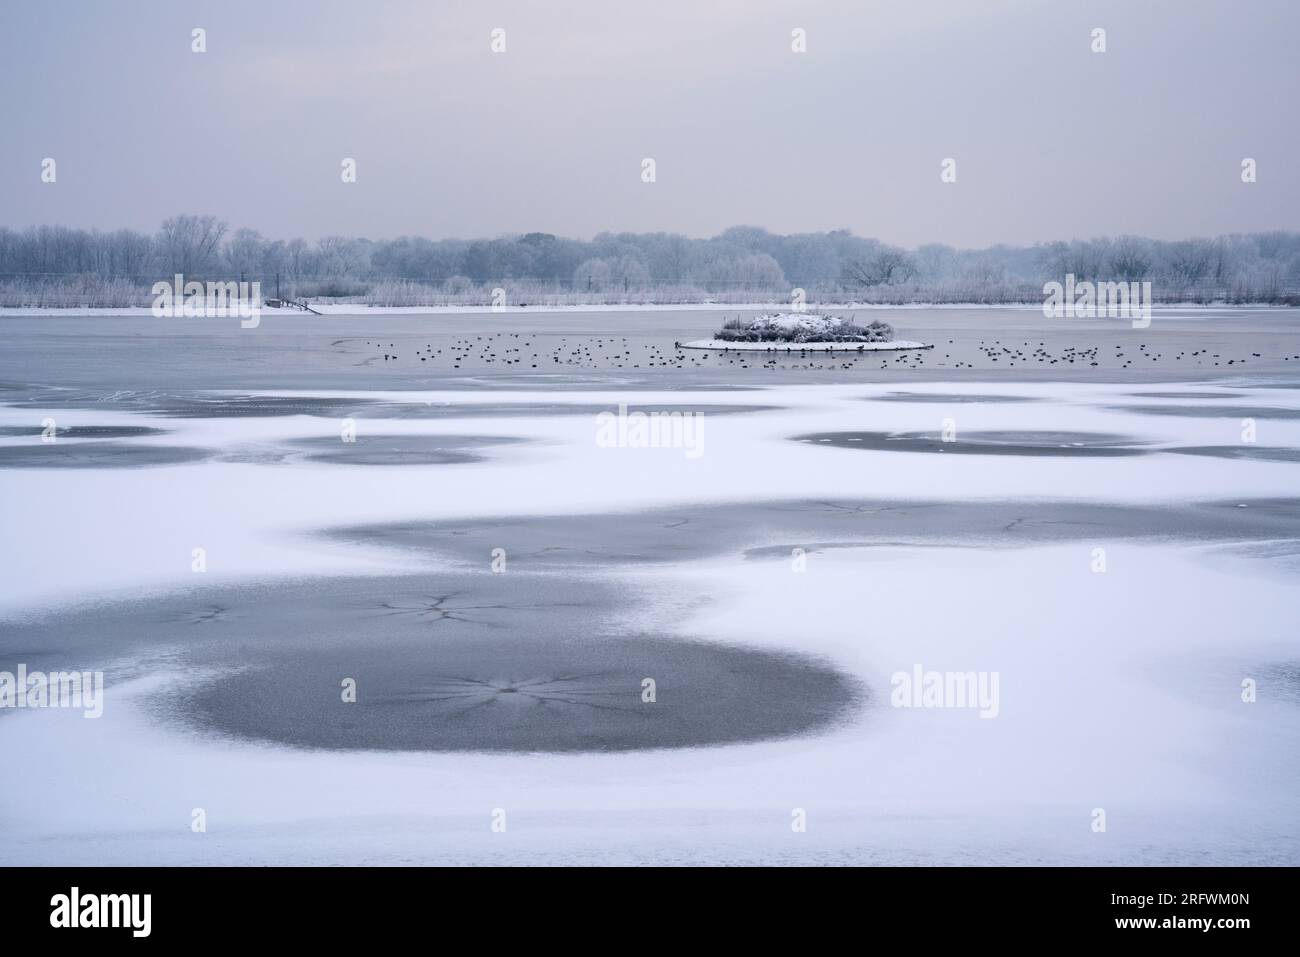 Ice patterns on Dernford Farm reservoir, Sawston, Cambridgeshire. Cold winter scene. Stock Photo